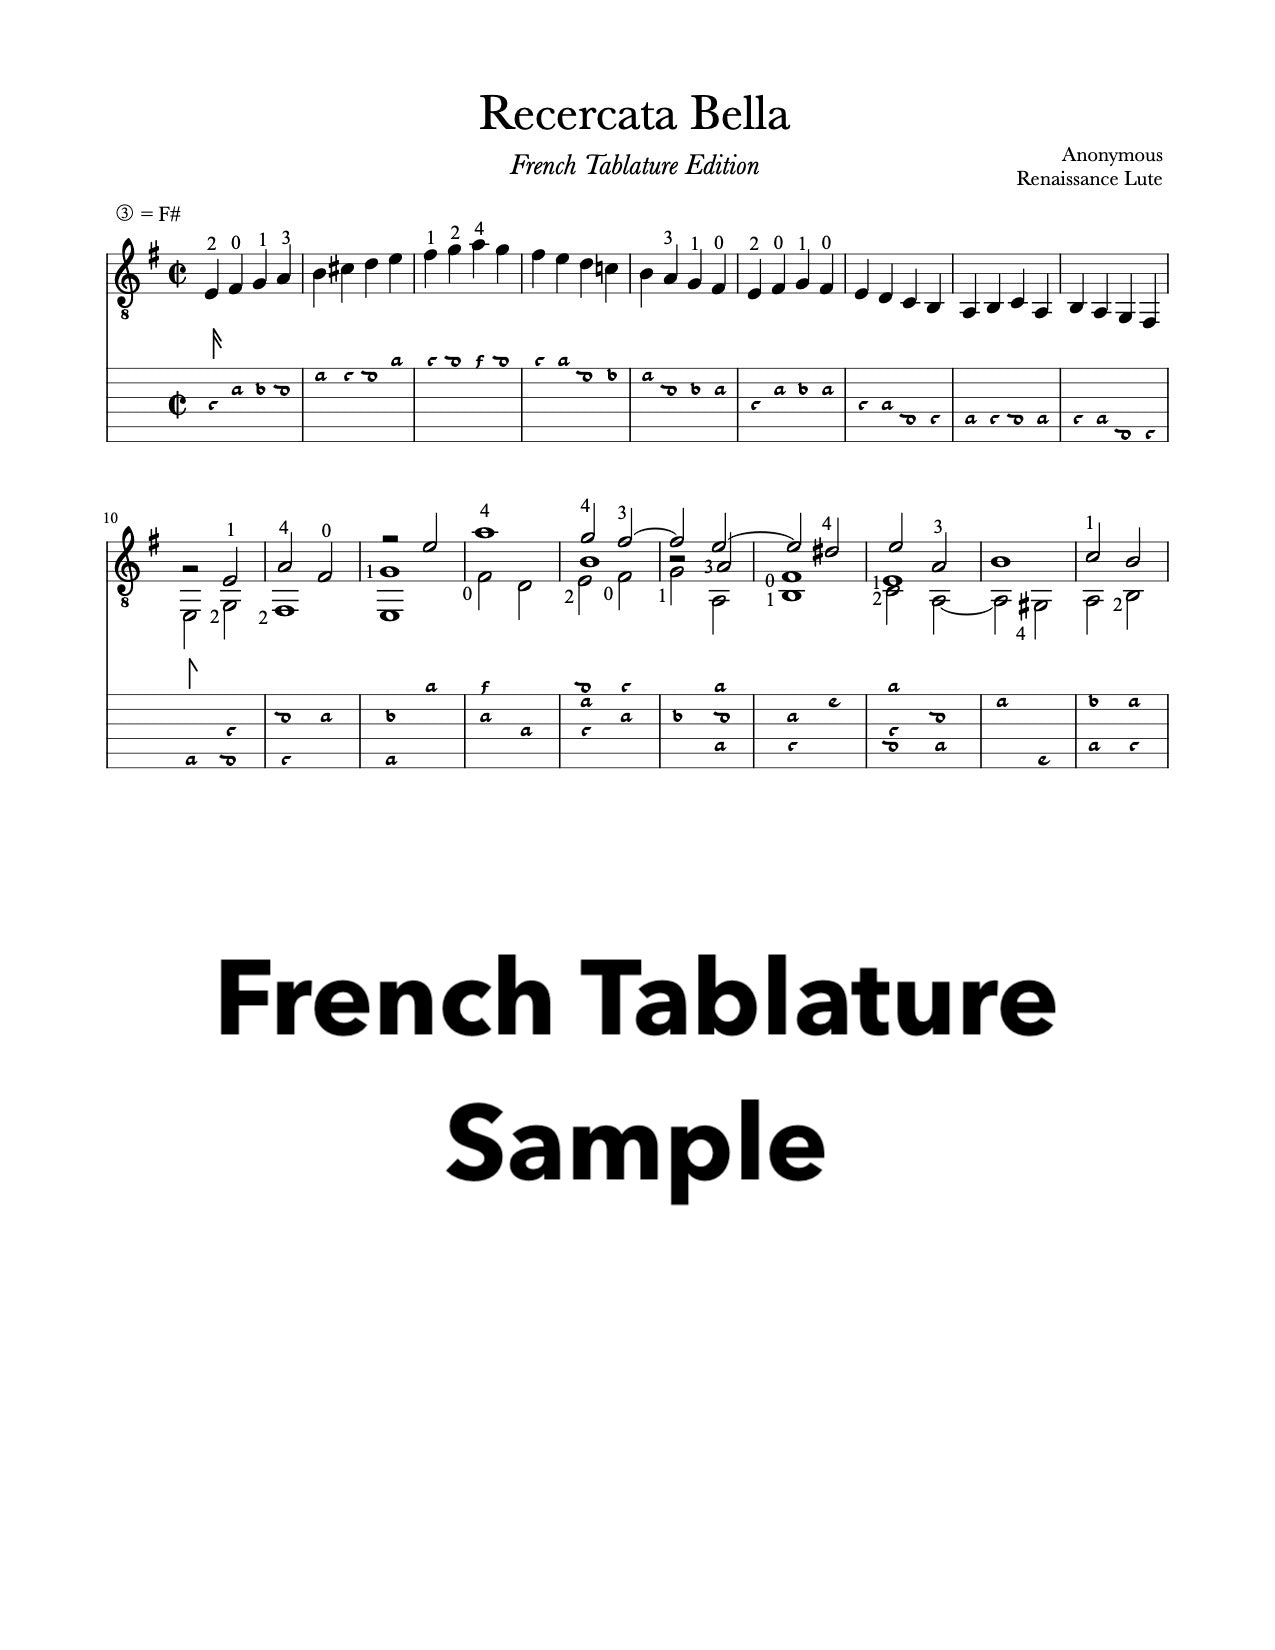 Recercata Bella - French Tablature Sample